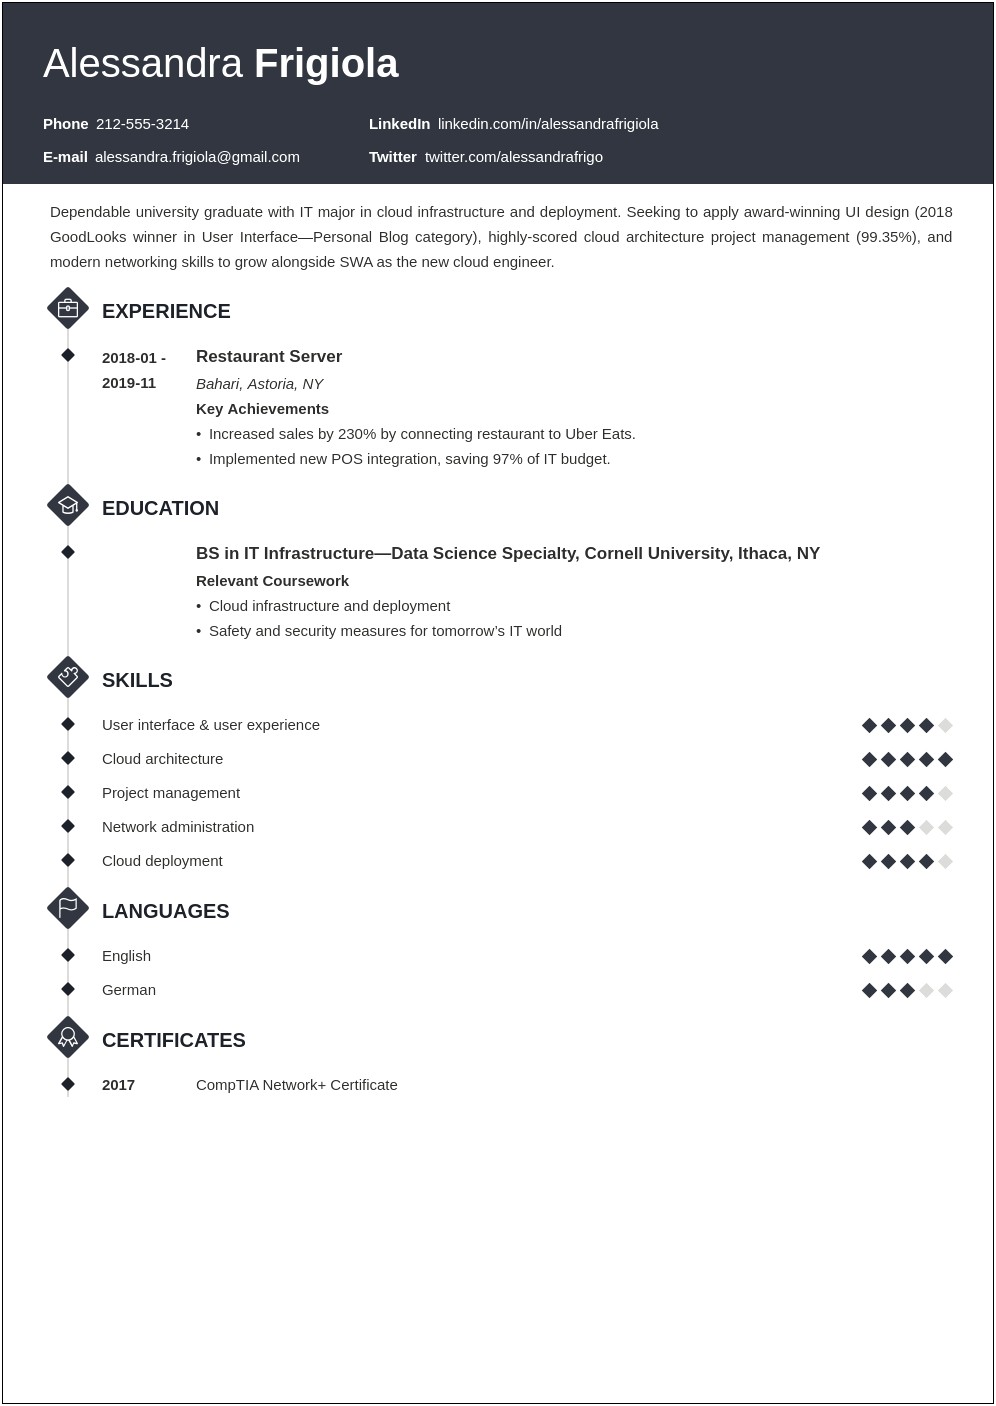 Sample Resume For Entry Level Management Position